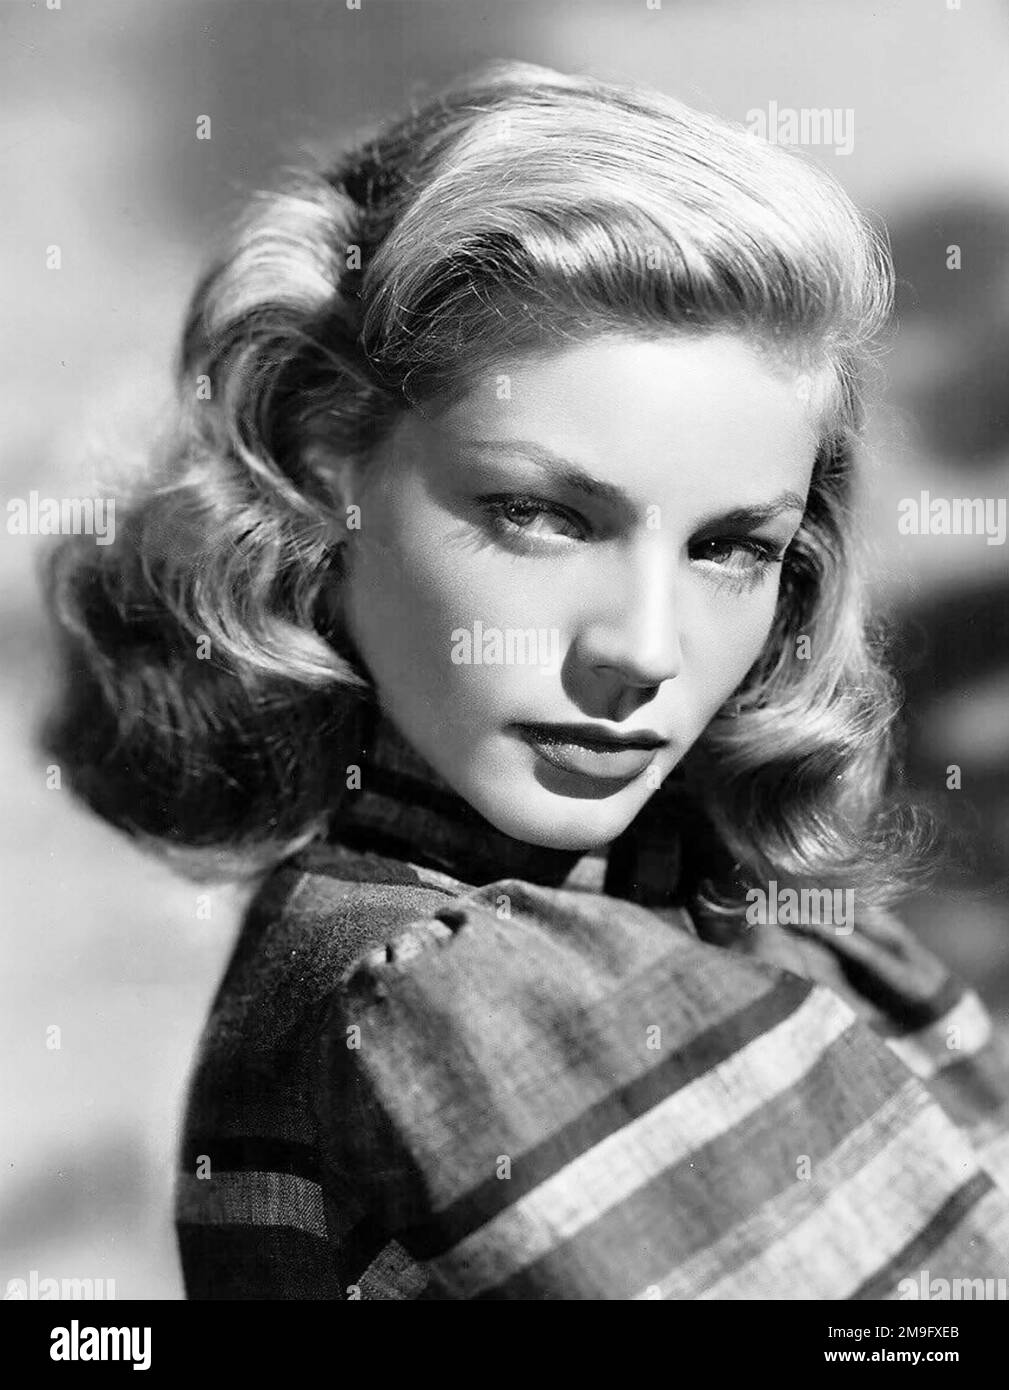 IL GRANDE SONNO 1946 Warner Bros. Film con Lauren Bacall Foto Stock